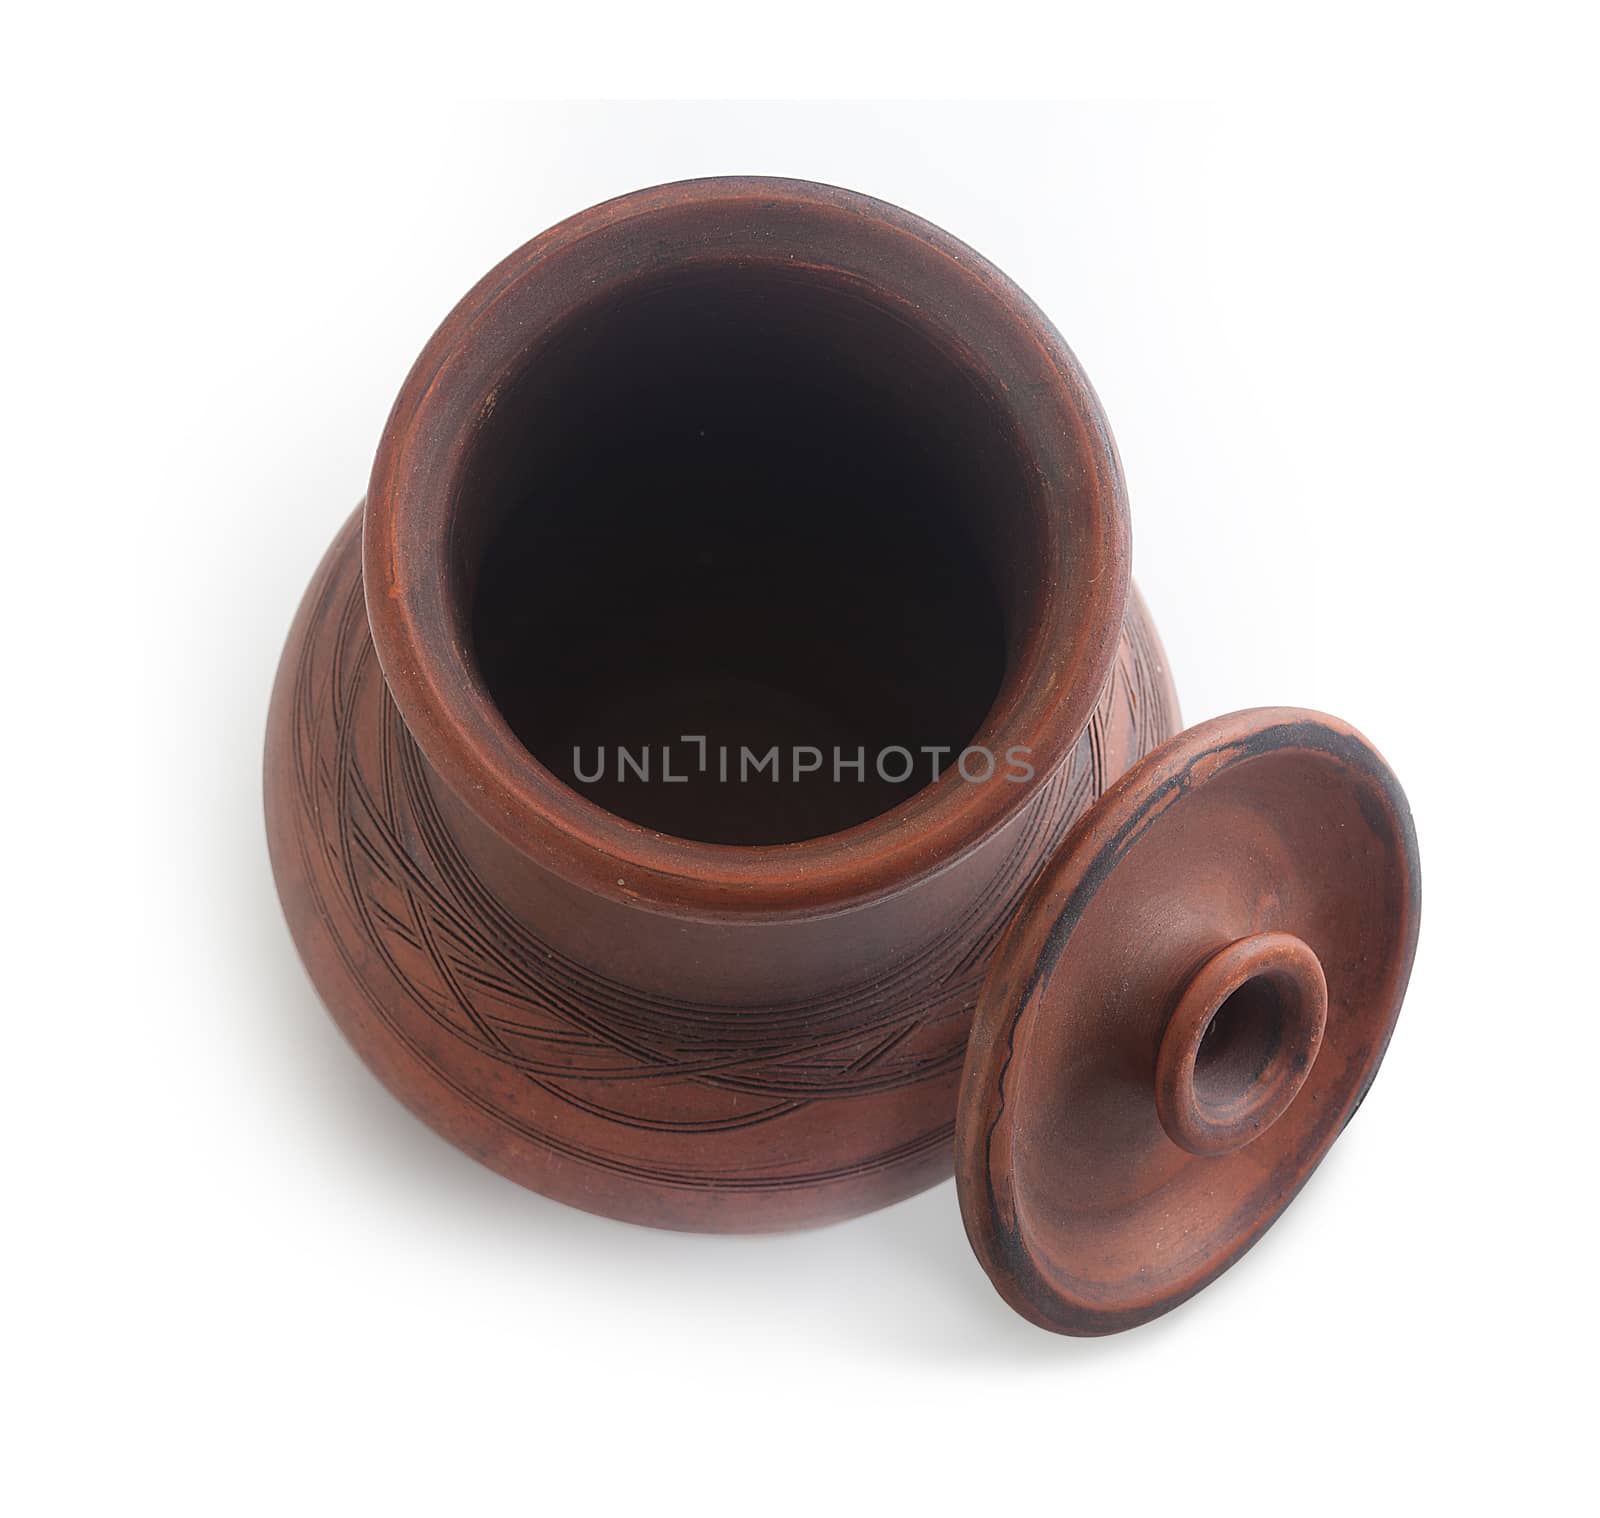 Brown clay jug by Angorius